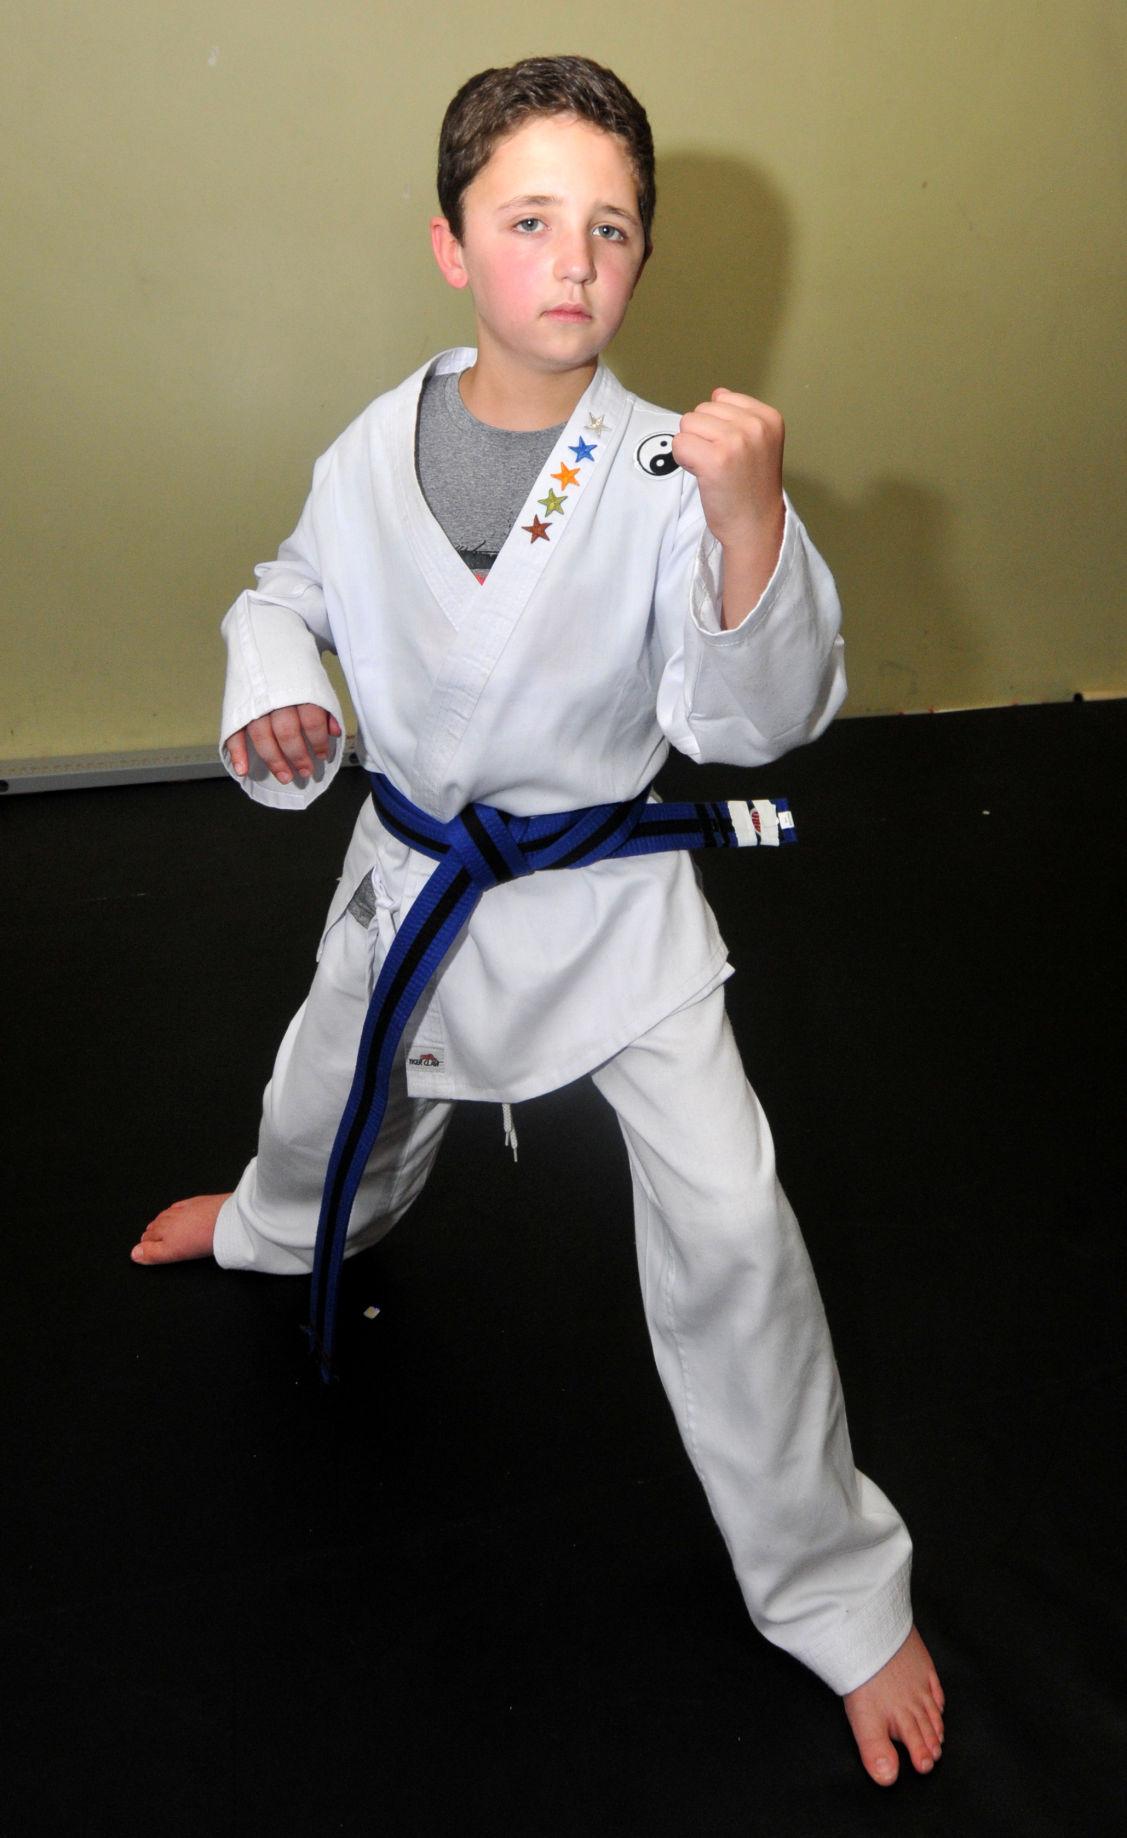  Chase strikes an intimidating karate pose post-stroke.  Photograph by Carl Kosola 